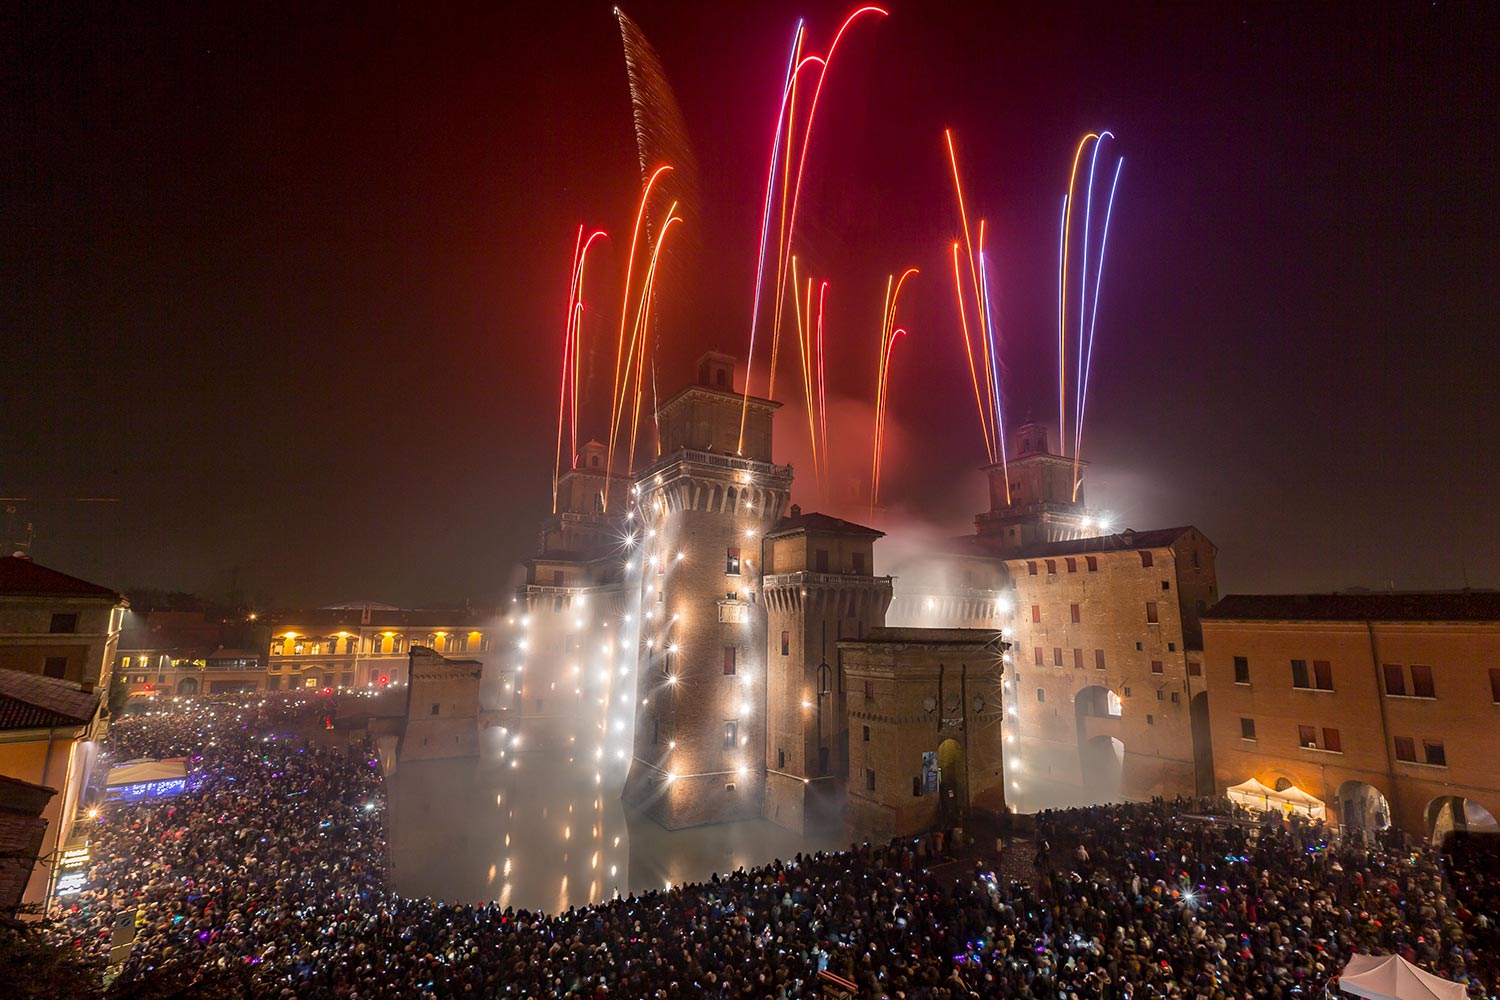 ITALY - Ferrara - Burning of the Castle